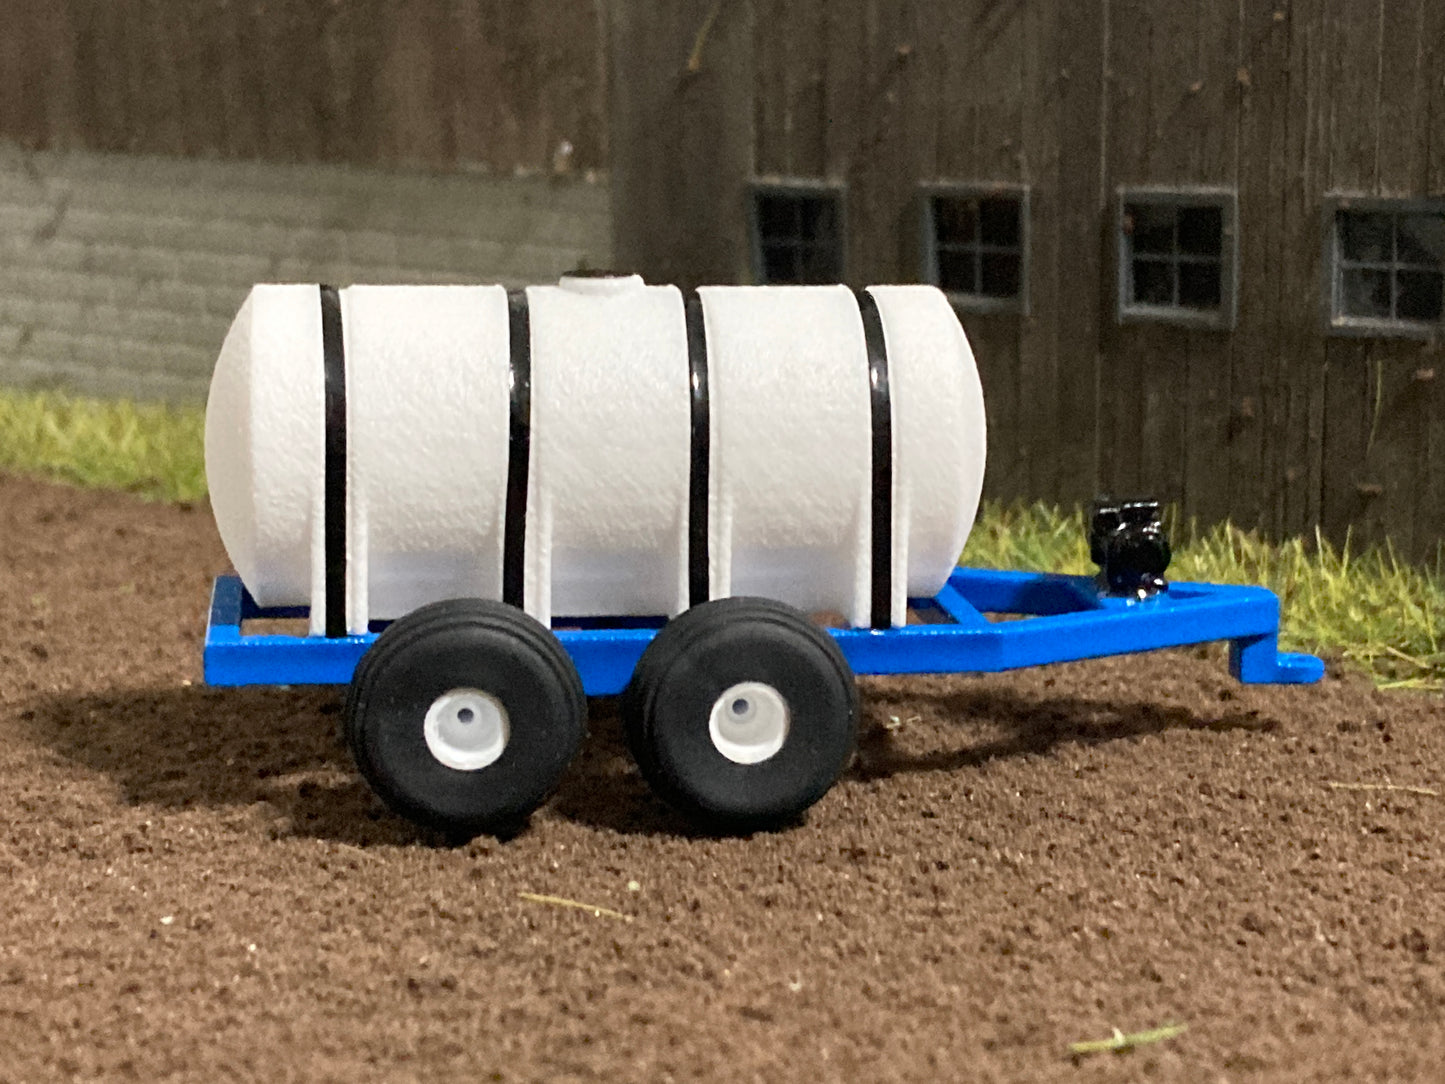 1/64 Liquid Fertilizer Tender Trailer Blue 1,050 Gallons (fits ball style hitch)